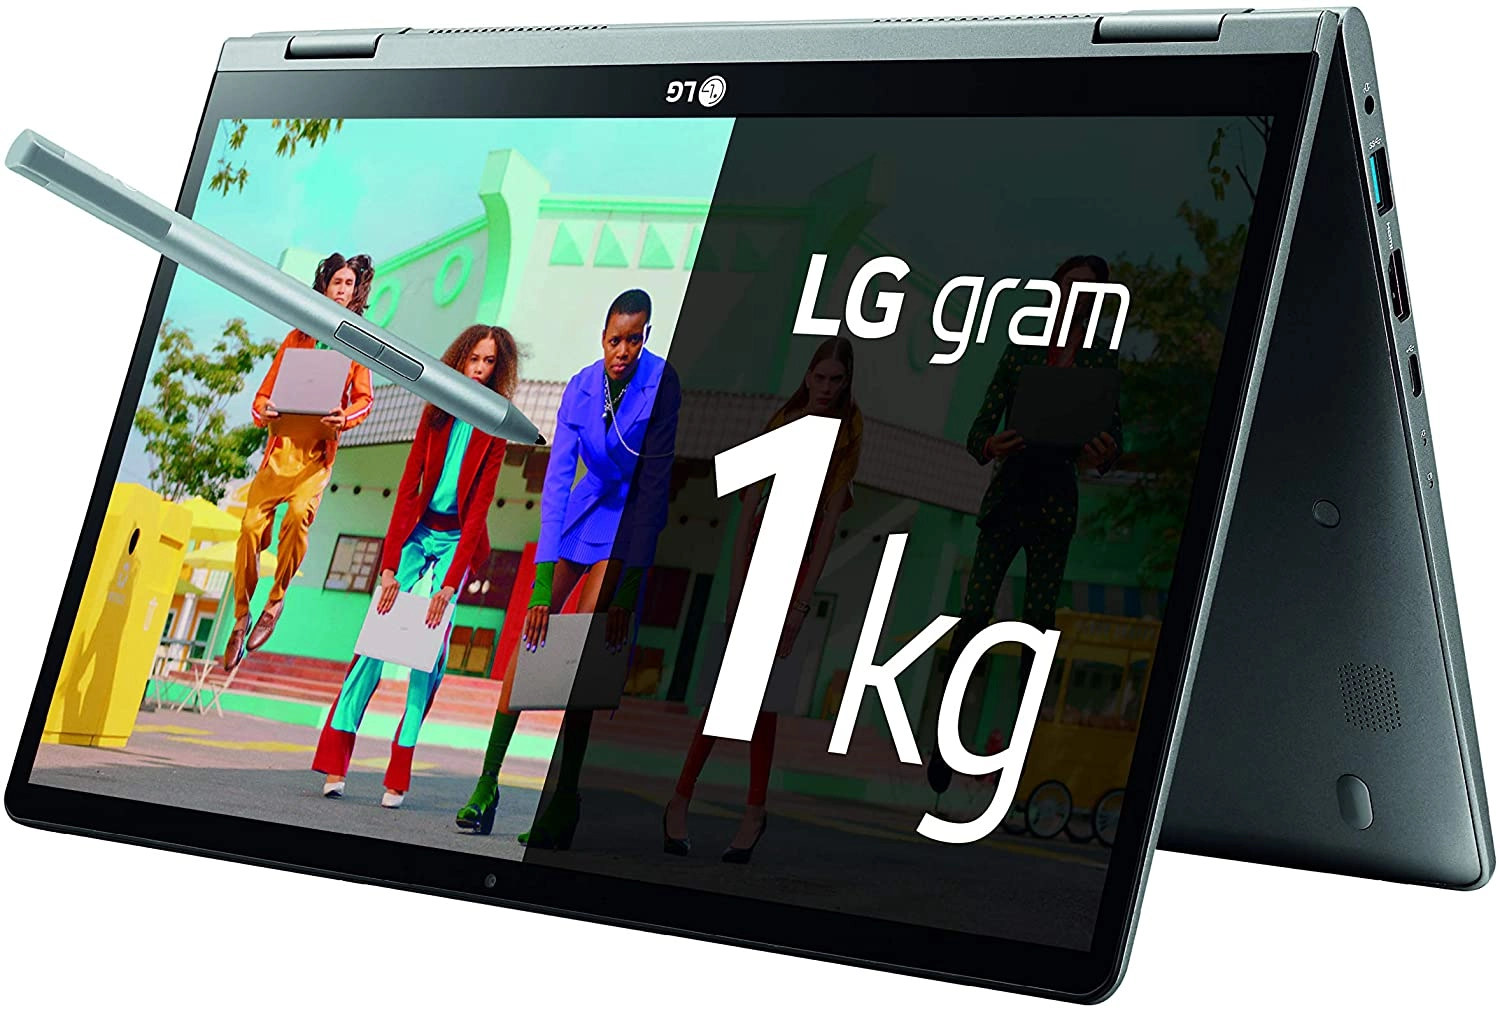 LG 14T90N-V-AA78B laptop image